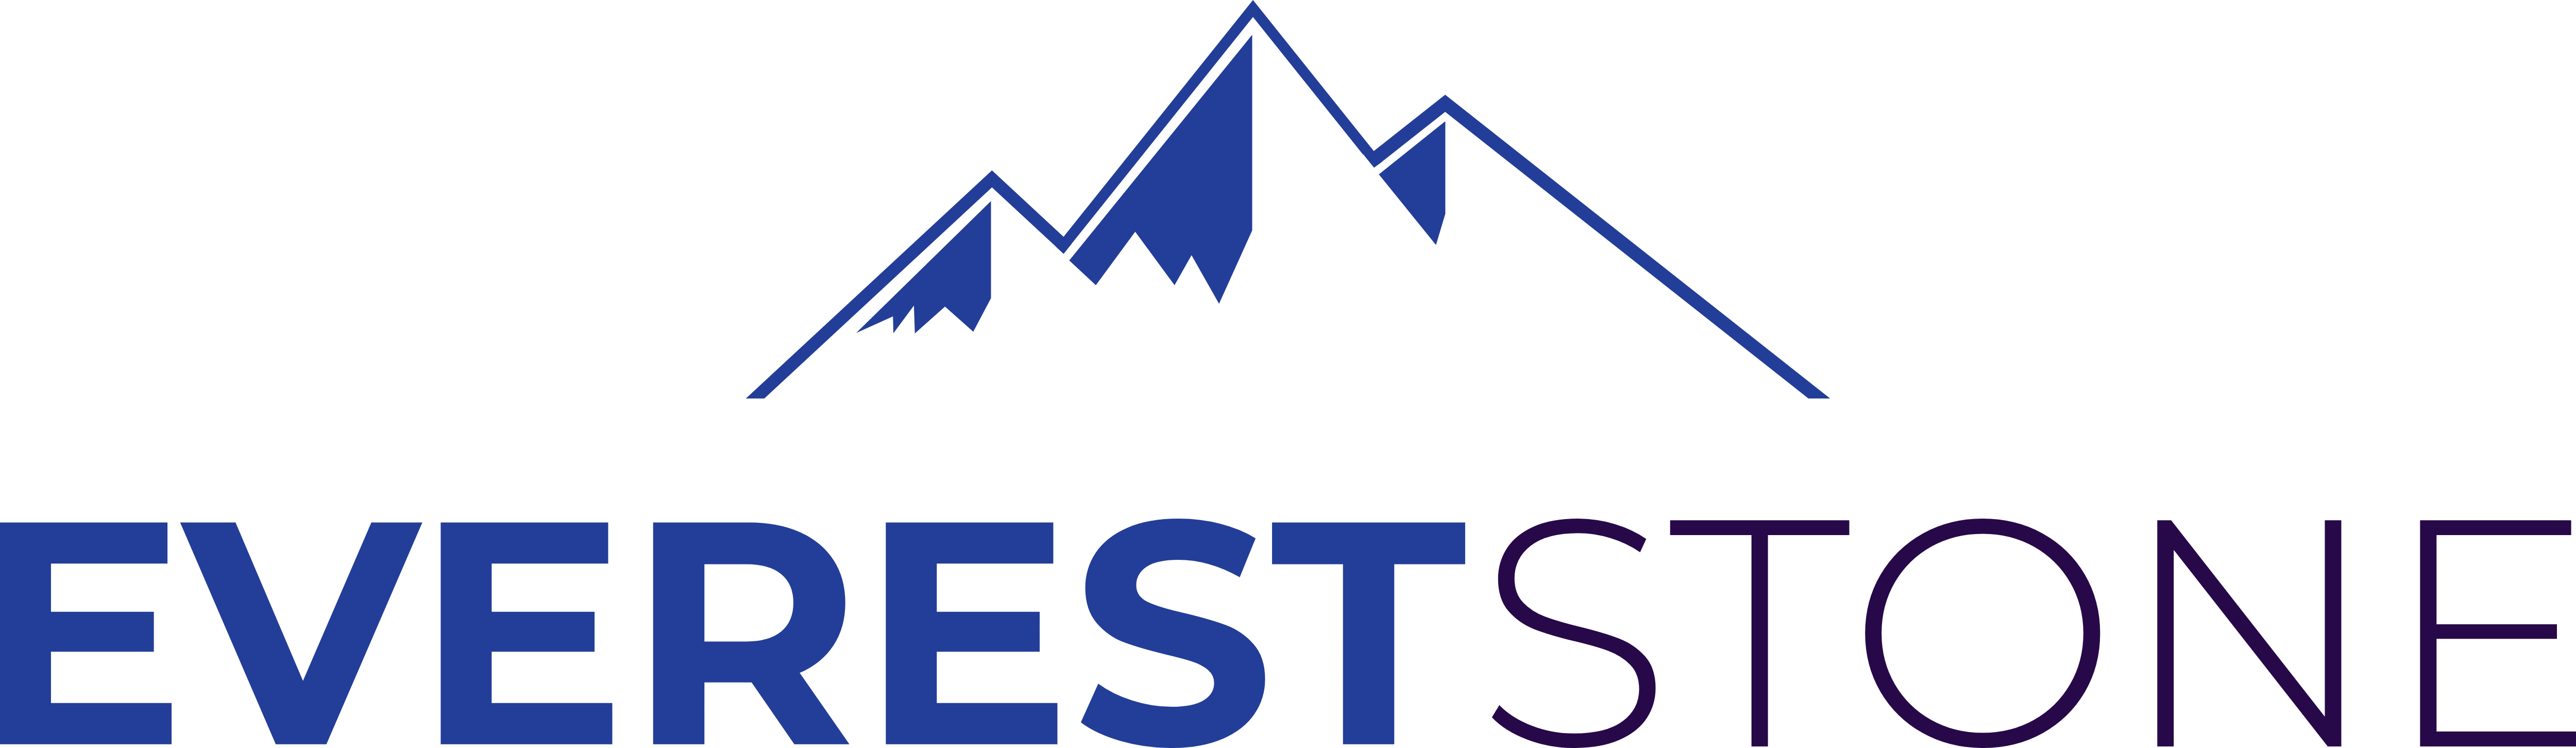 Everest Logo - Original on Transparent